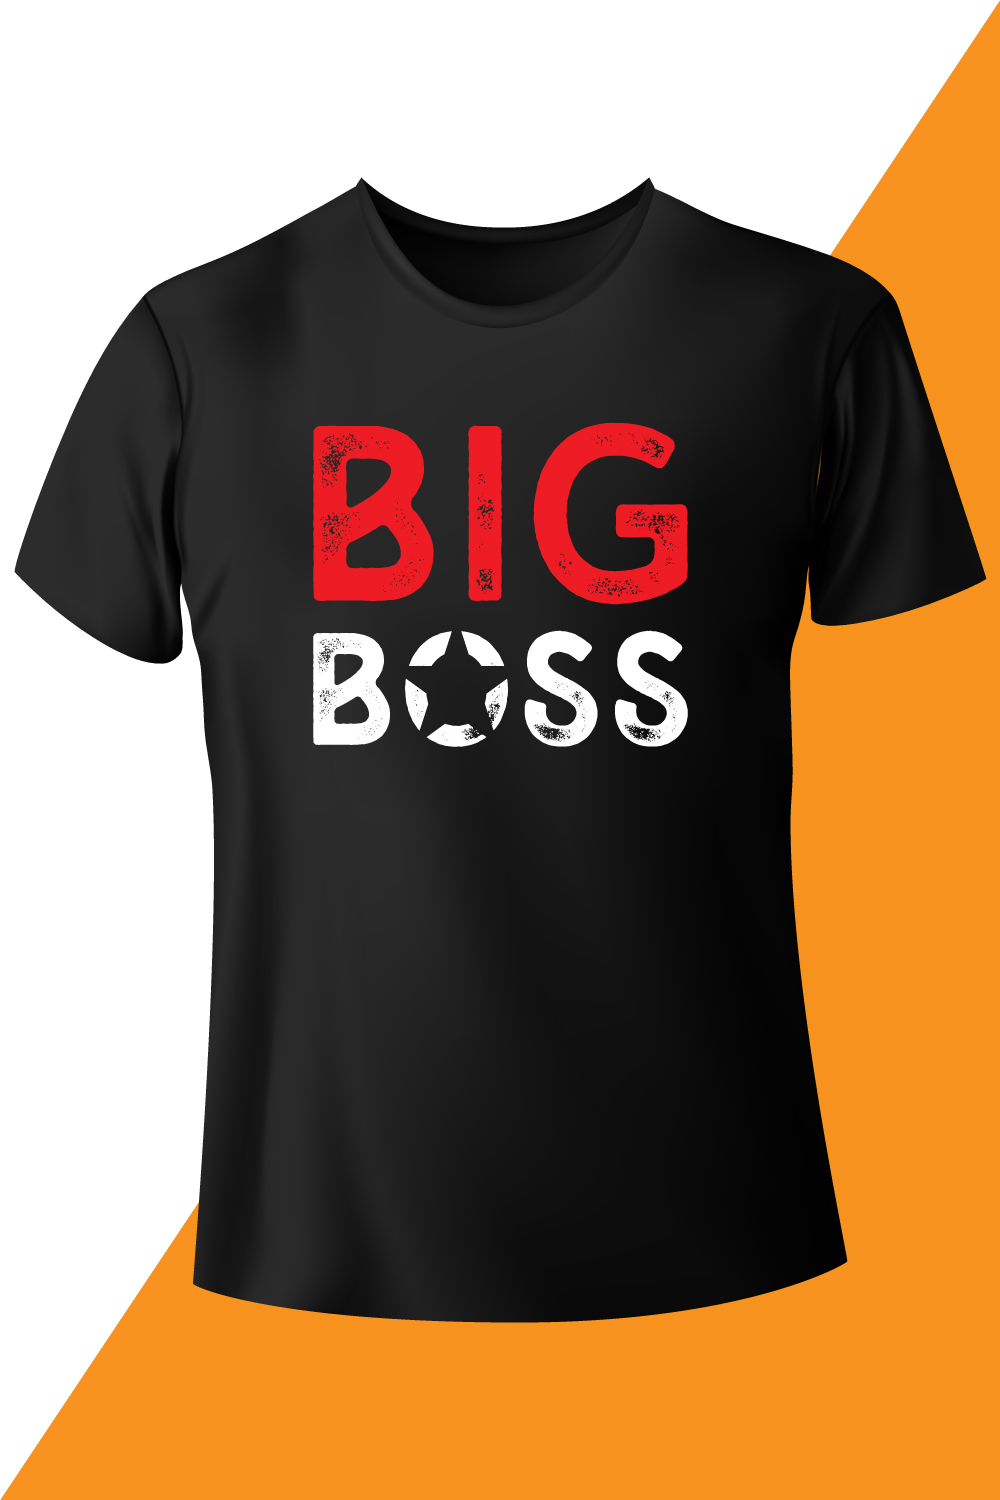 Image of a black t-shirt with a wonderful Big Boss slogan.